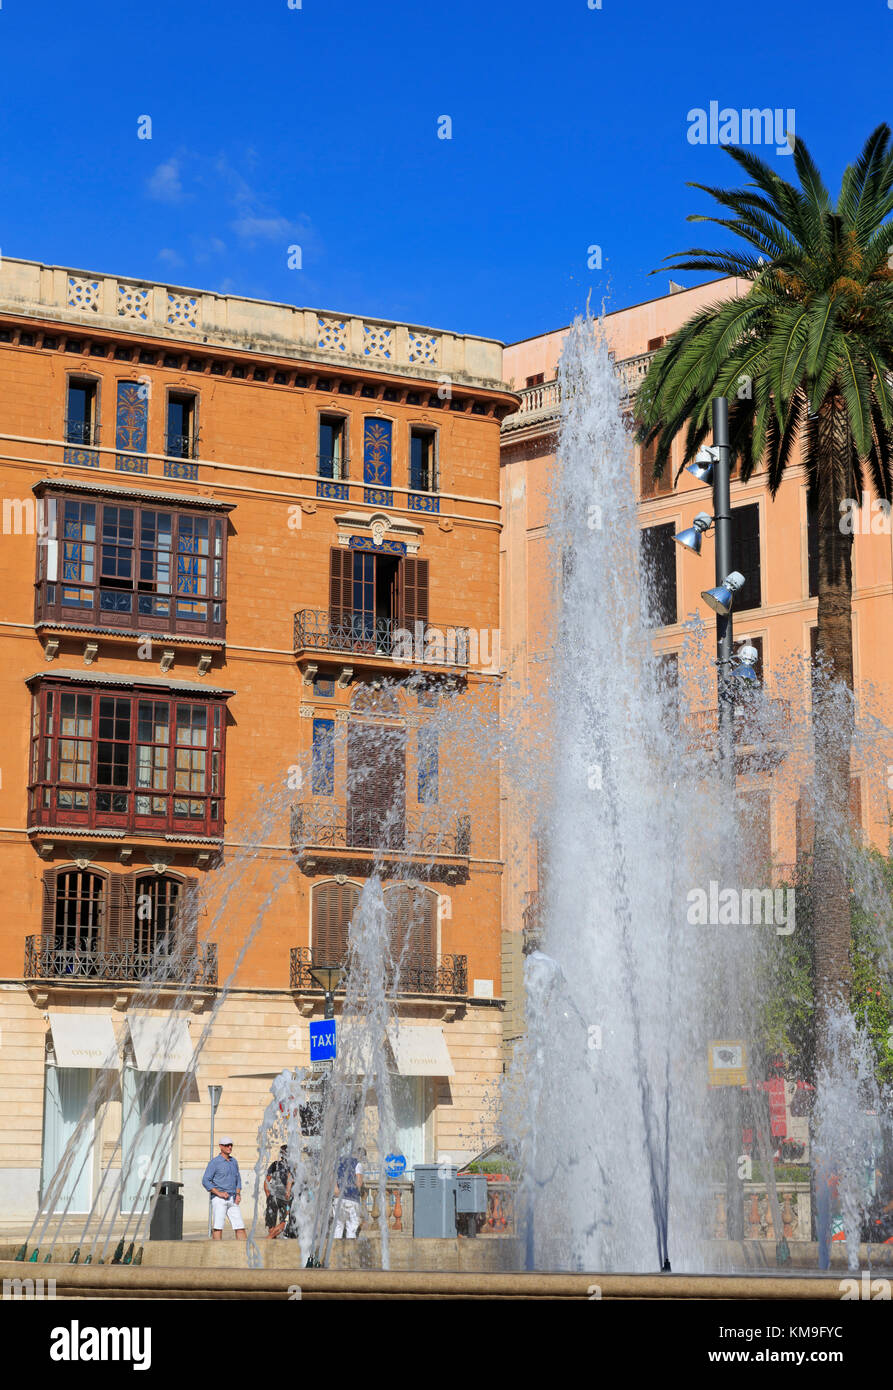 La plaza de la Reina, Palma de Mallorca, Majorque, Espagne, îles belearic, Europe Banque D'Images